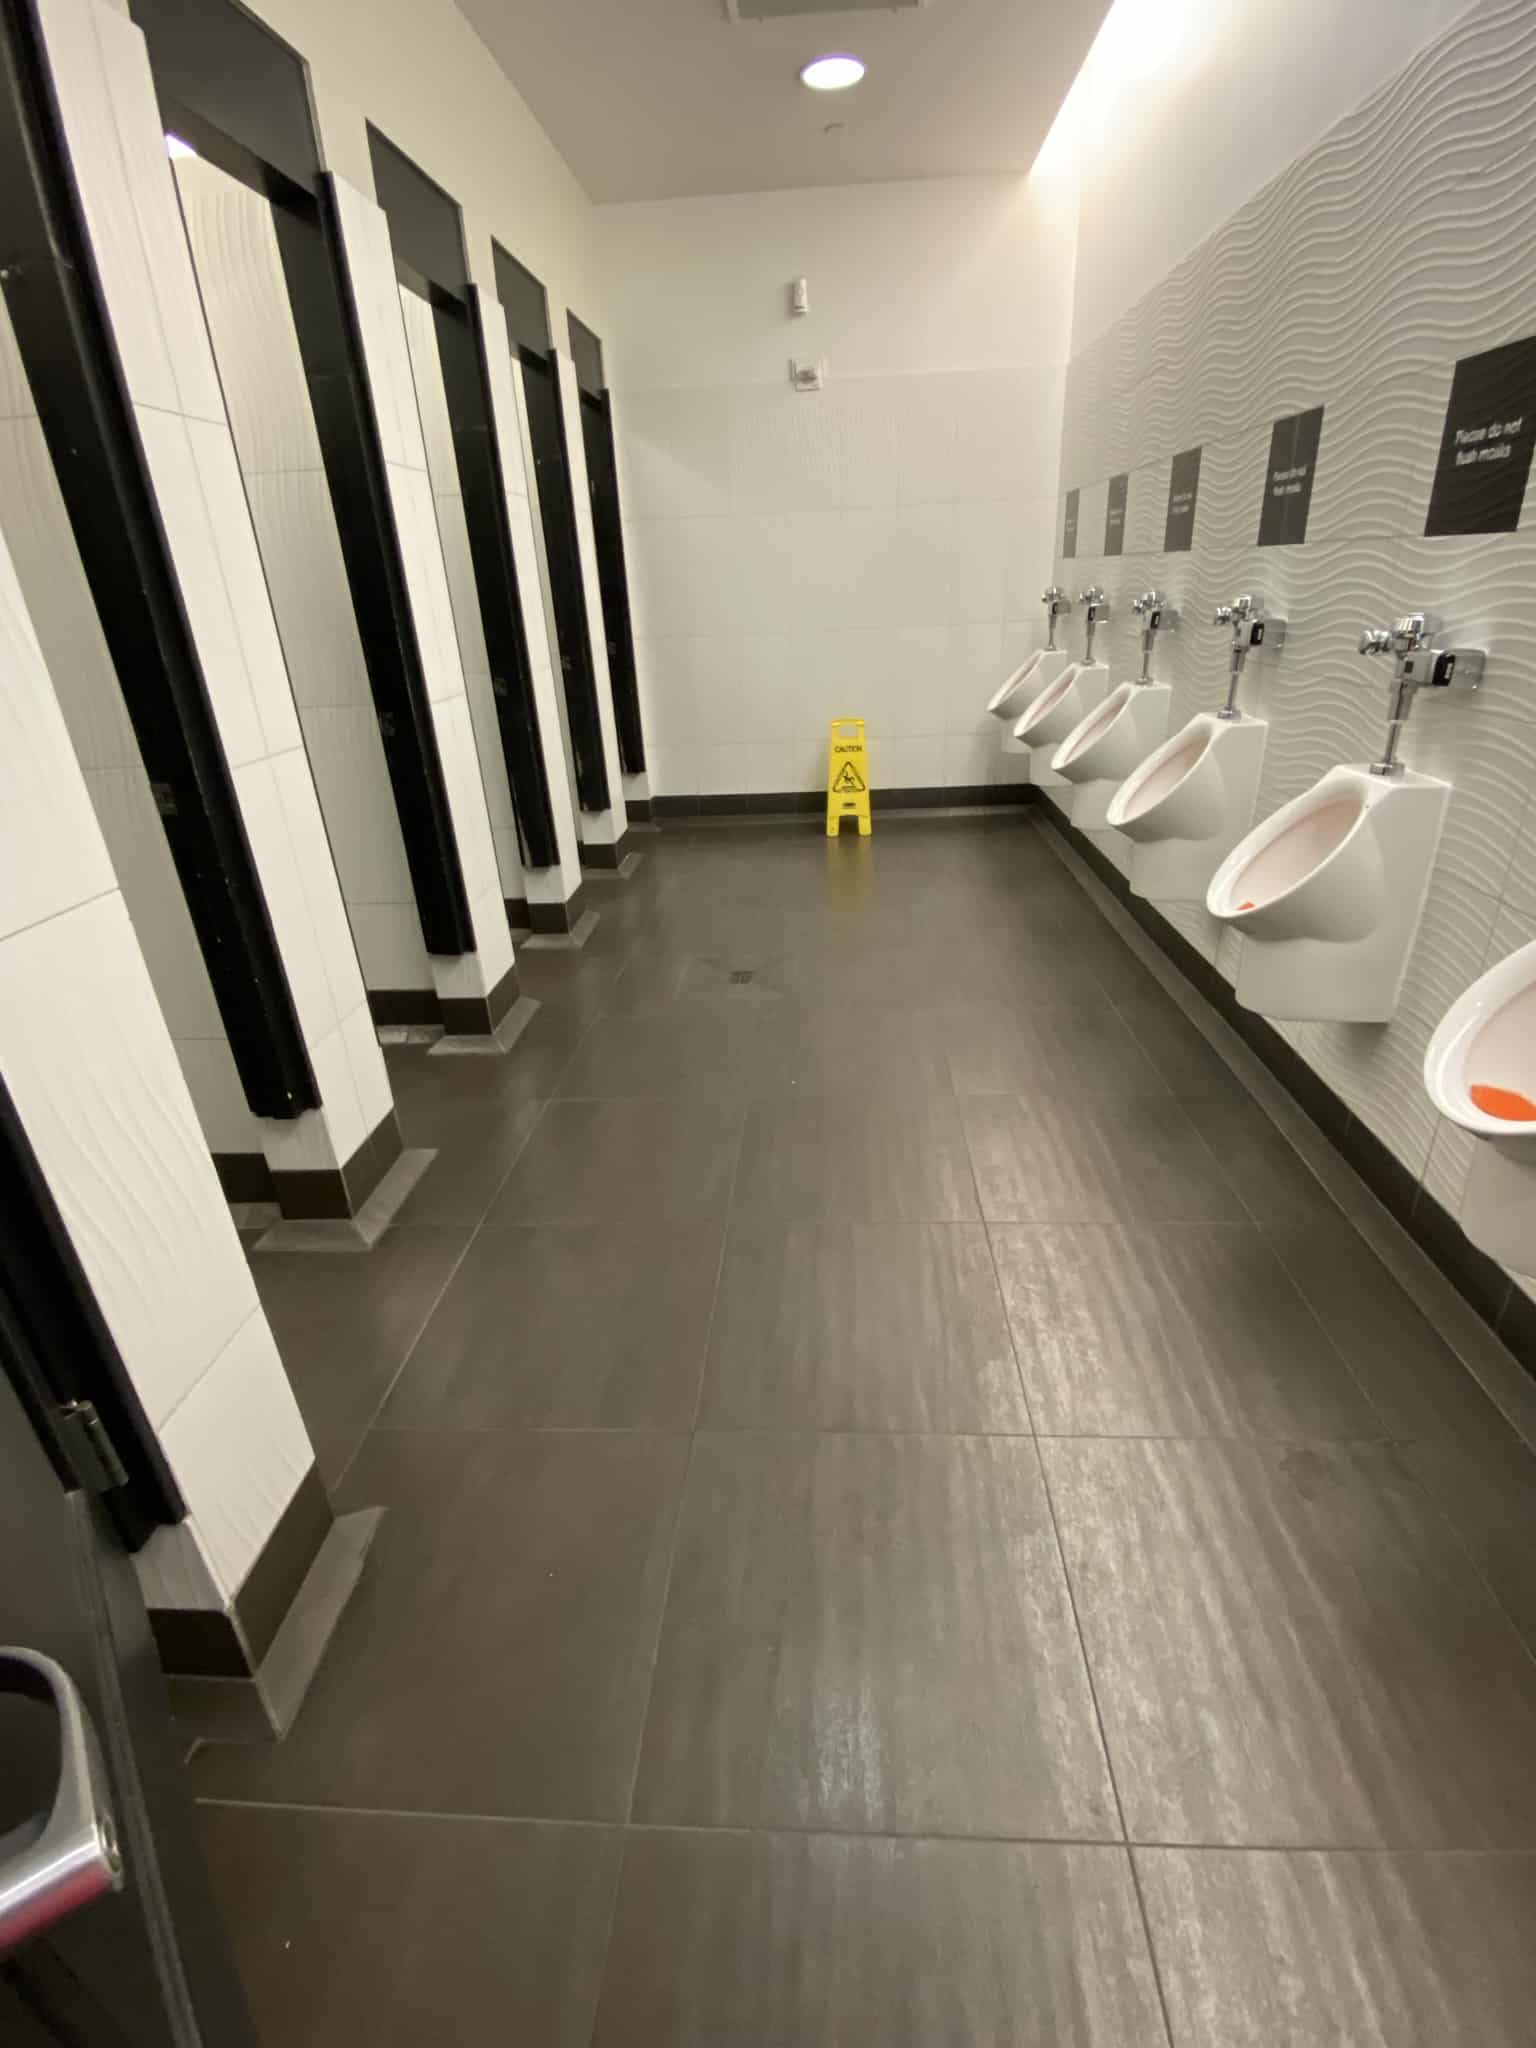 Anti-Slip flooring in mens bathroom